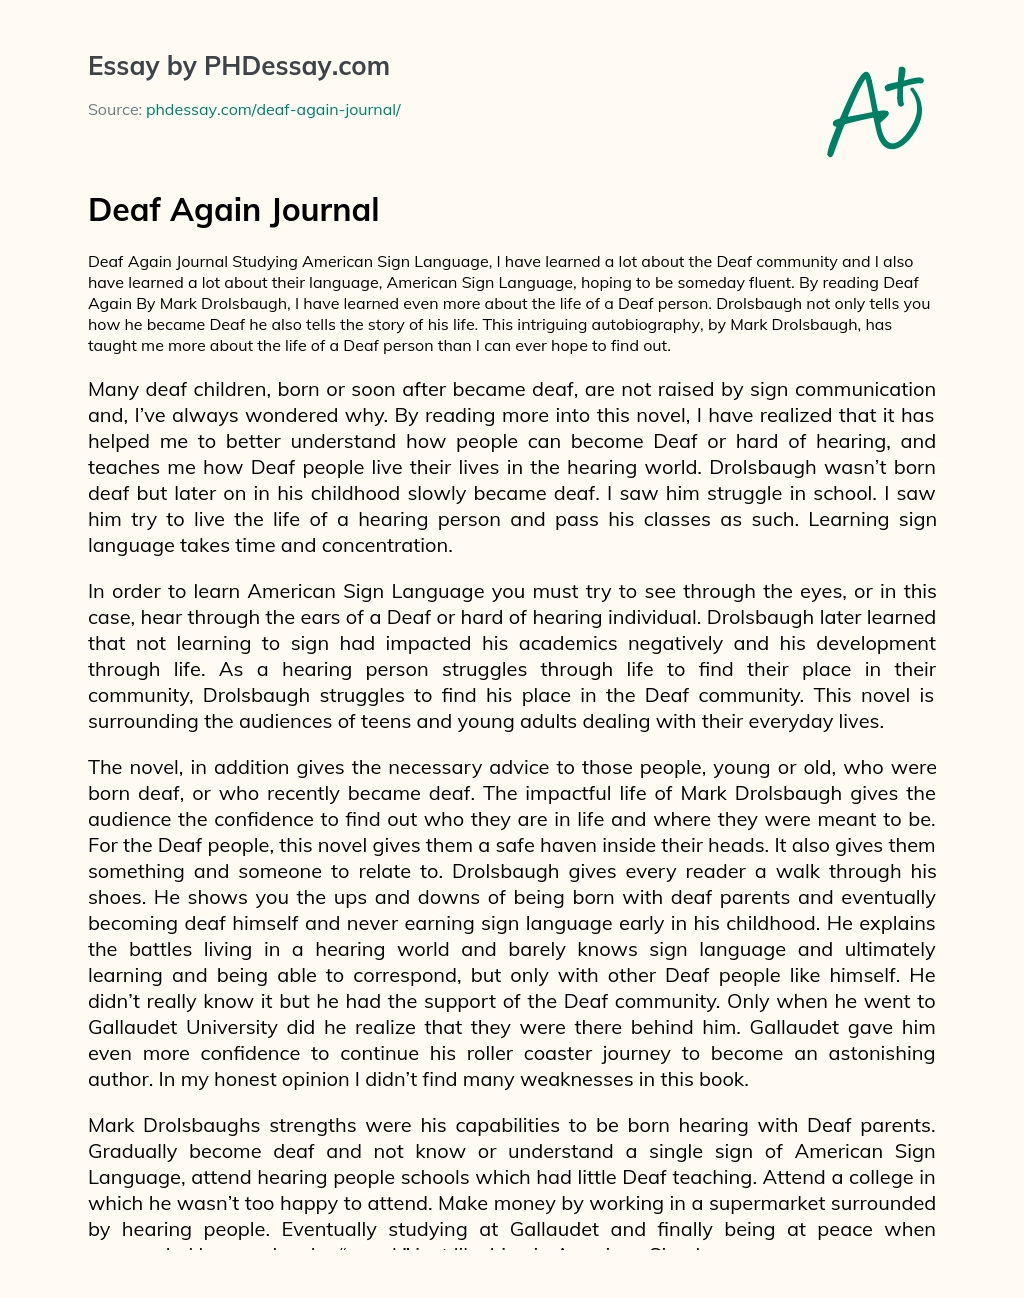 Deaf Again Journal essay